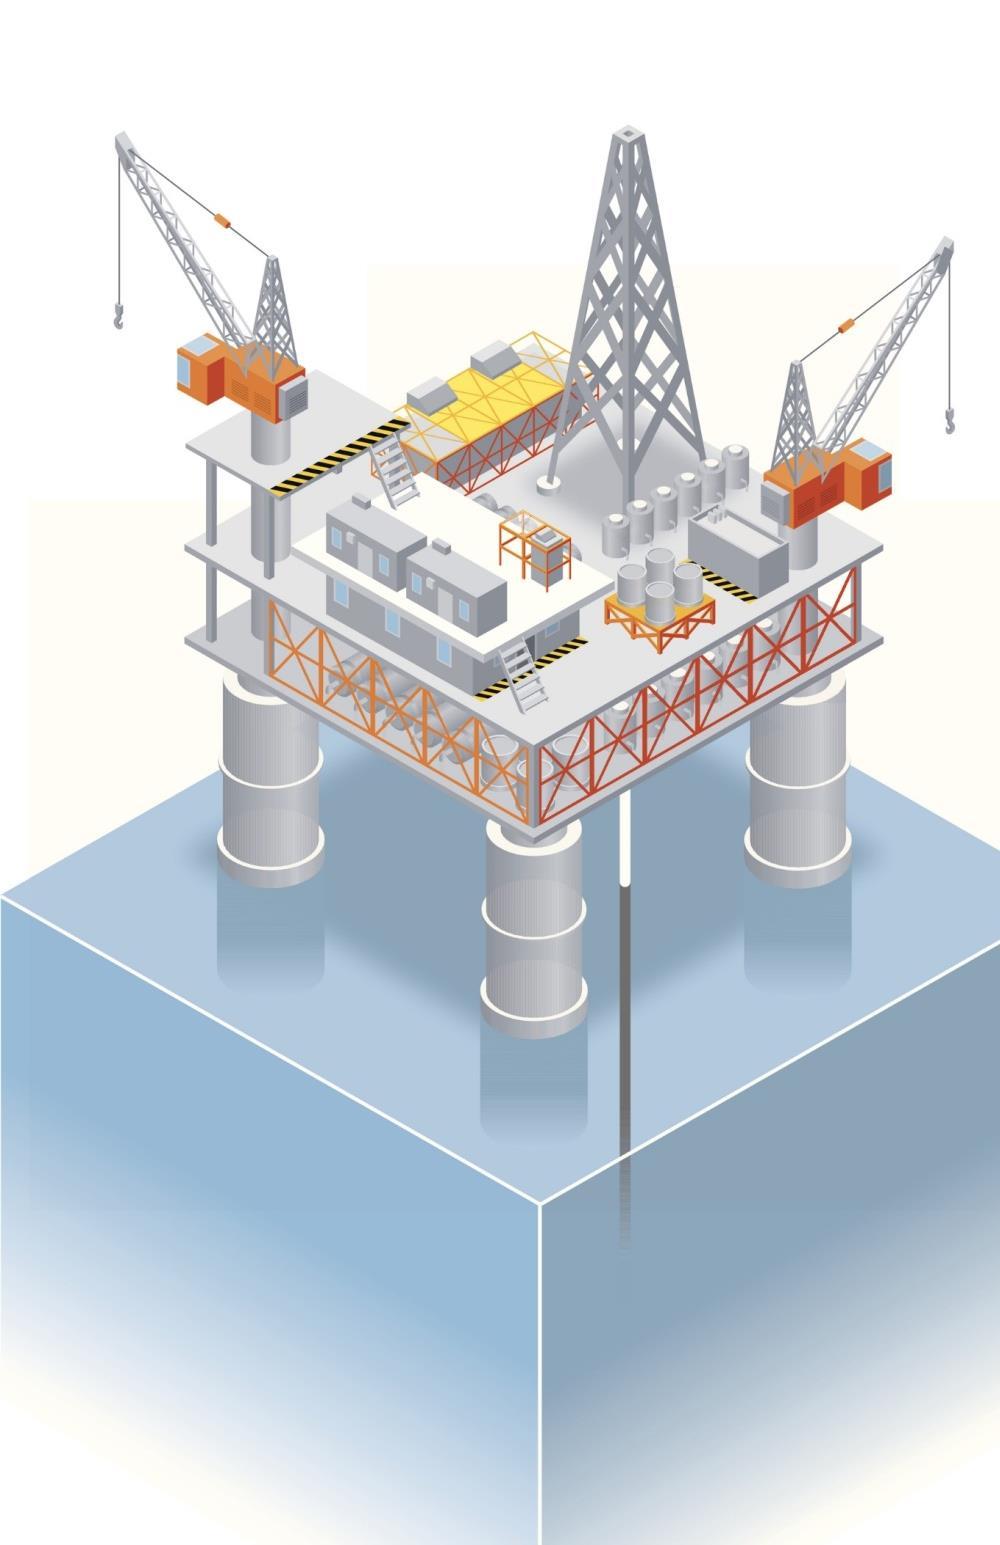 Next Generation Composite Flexible Risers GE Oil & Gas Wellstream Flexibles MCE Deepwater Development 2017 30% lighter 20% savings on total installed cost Deeper water and